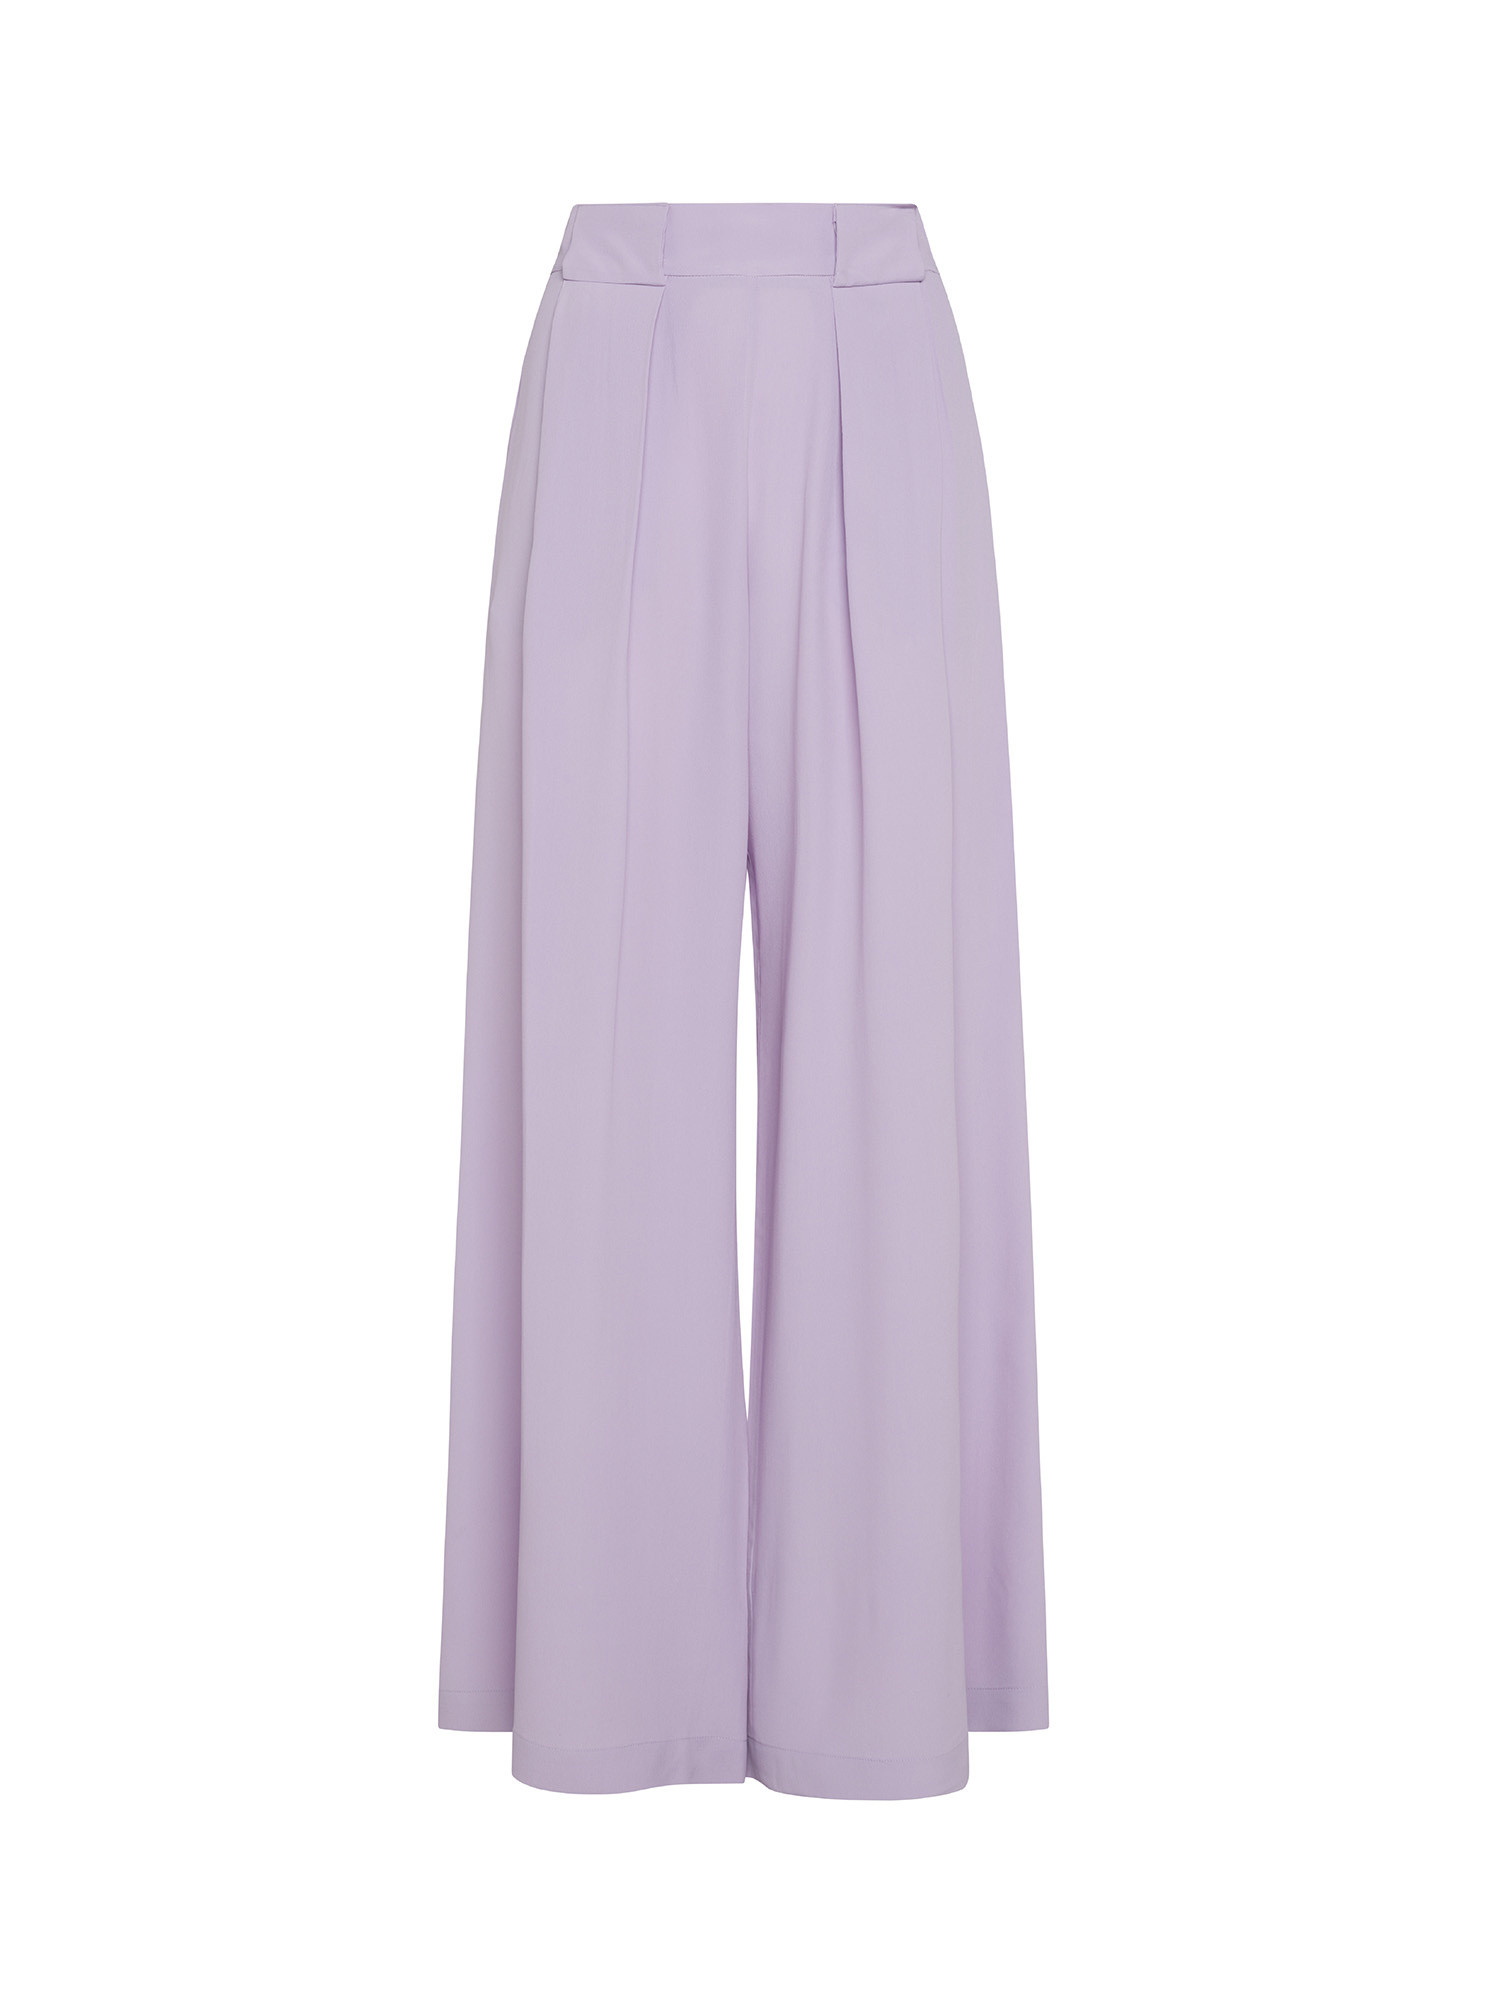 Momonì - Aspen pants in cràªpe-silk blend, Purple Wisteria, large image number 0